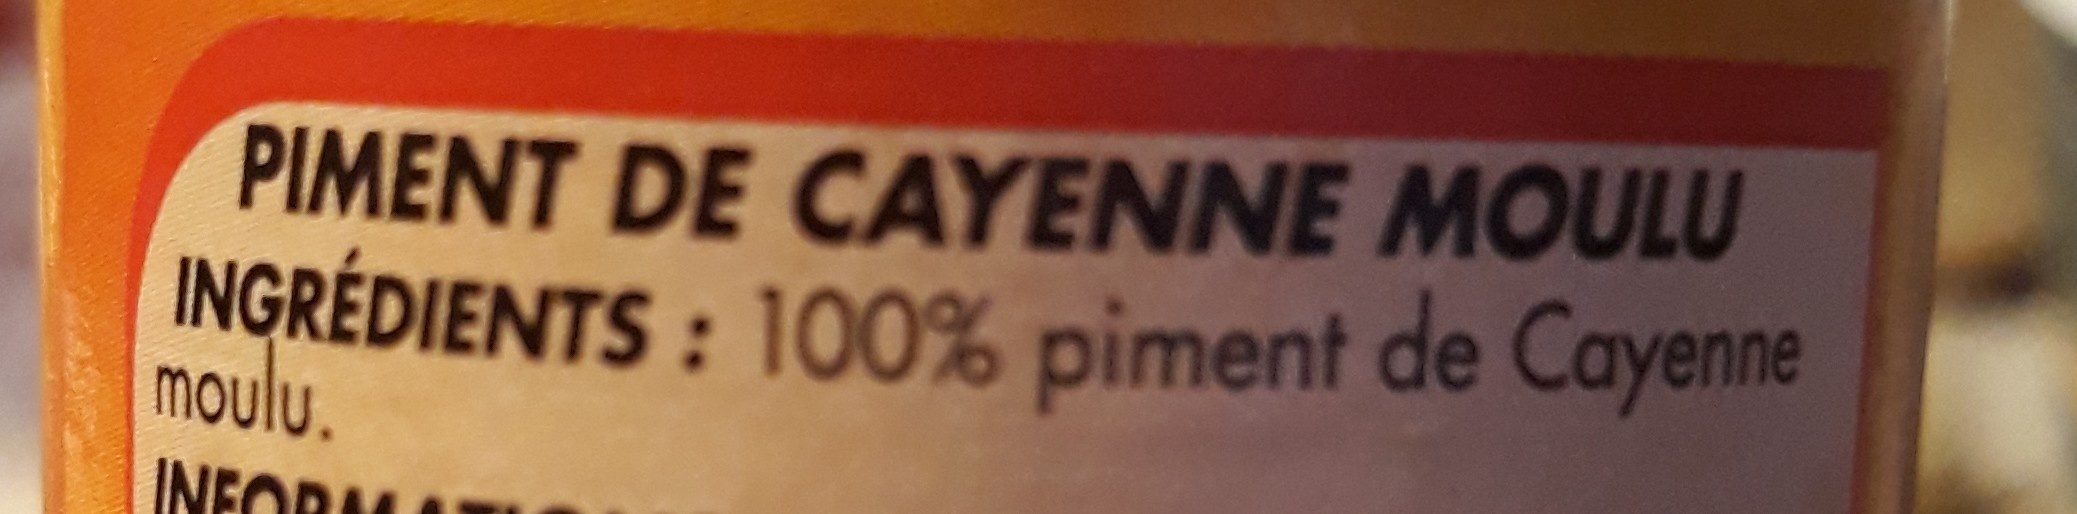 Piment de Cayenne moulu - Ingredients - fr